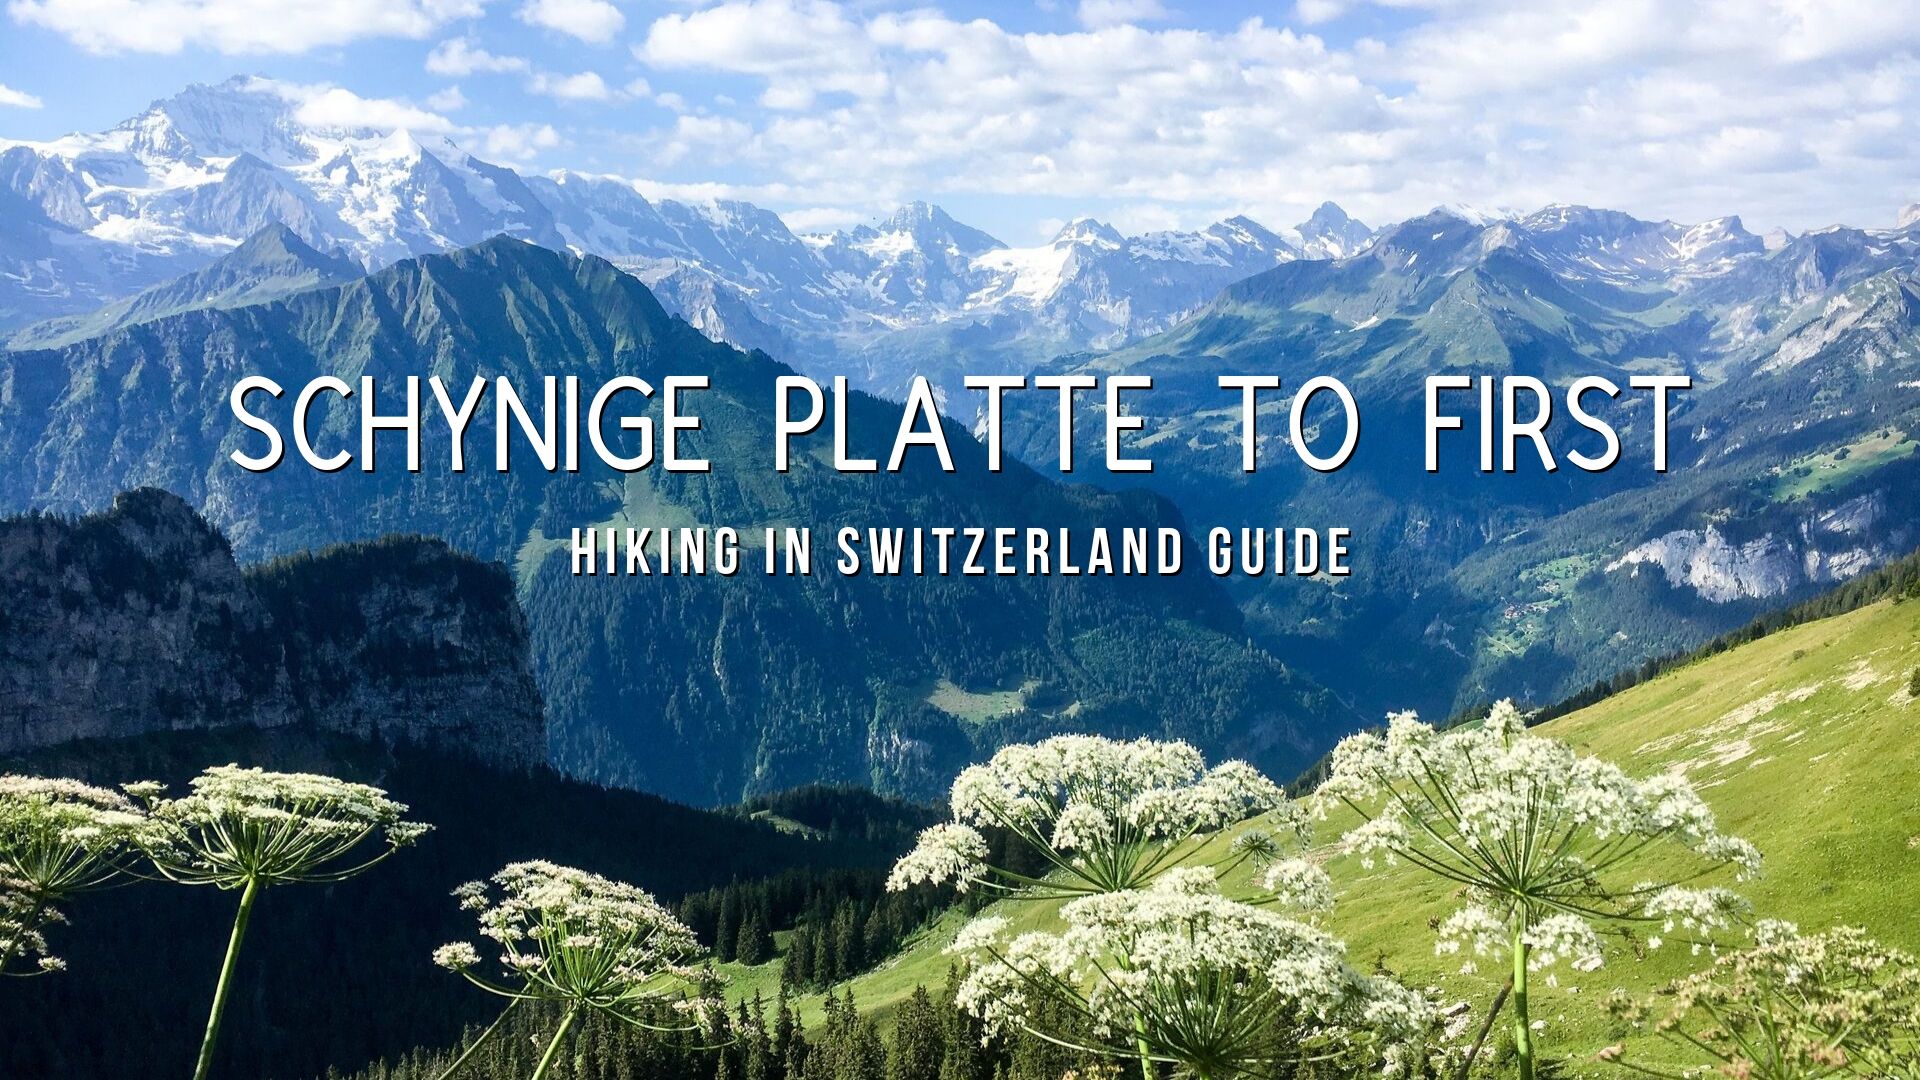 Schynige Platte to First grindelwald hike switzerland cover